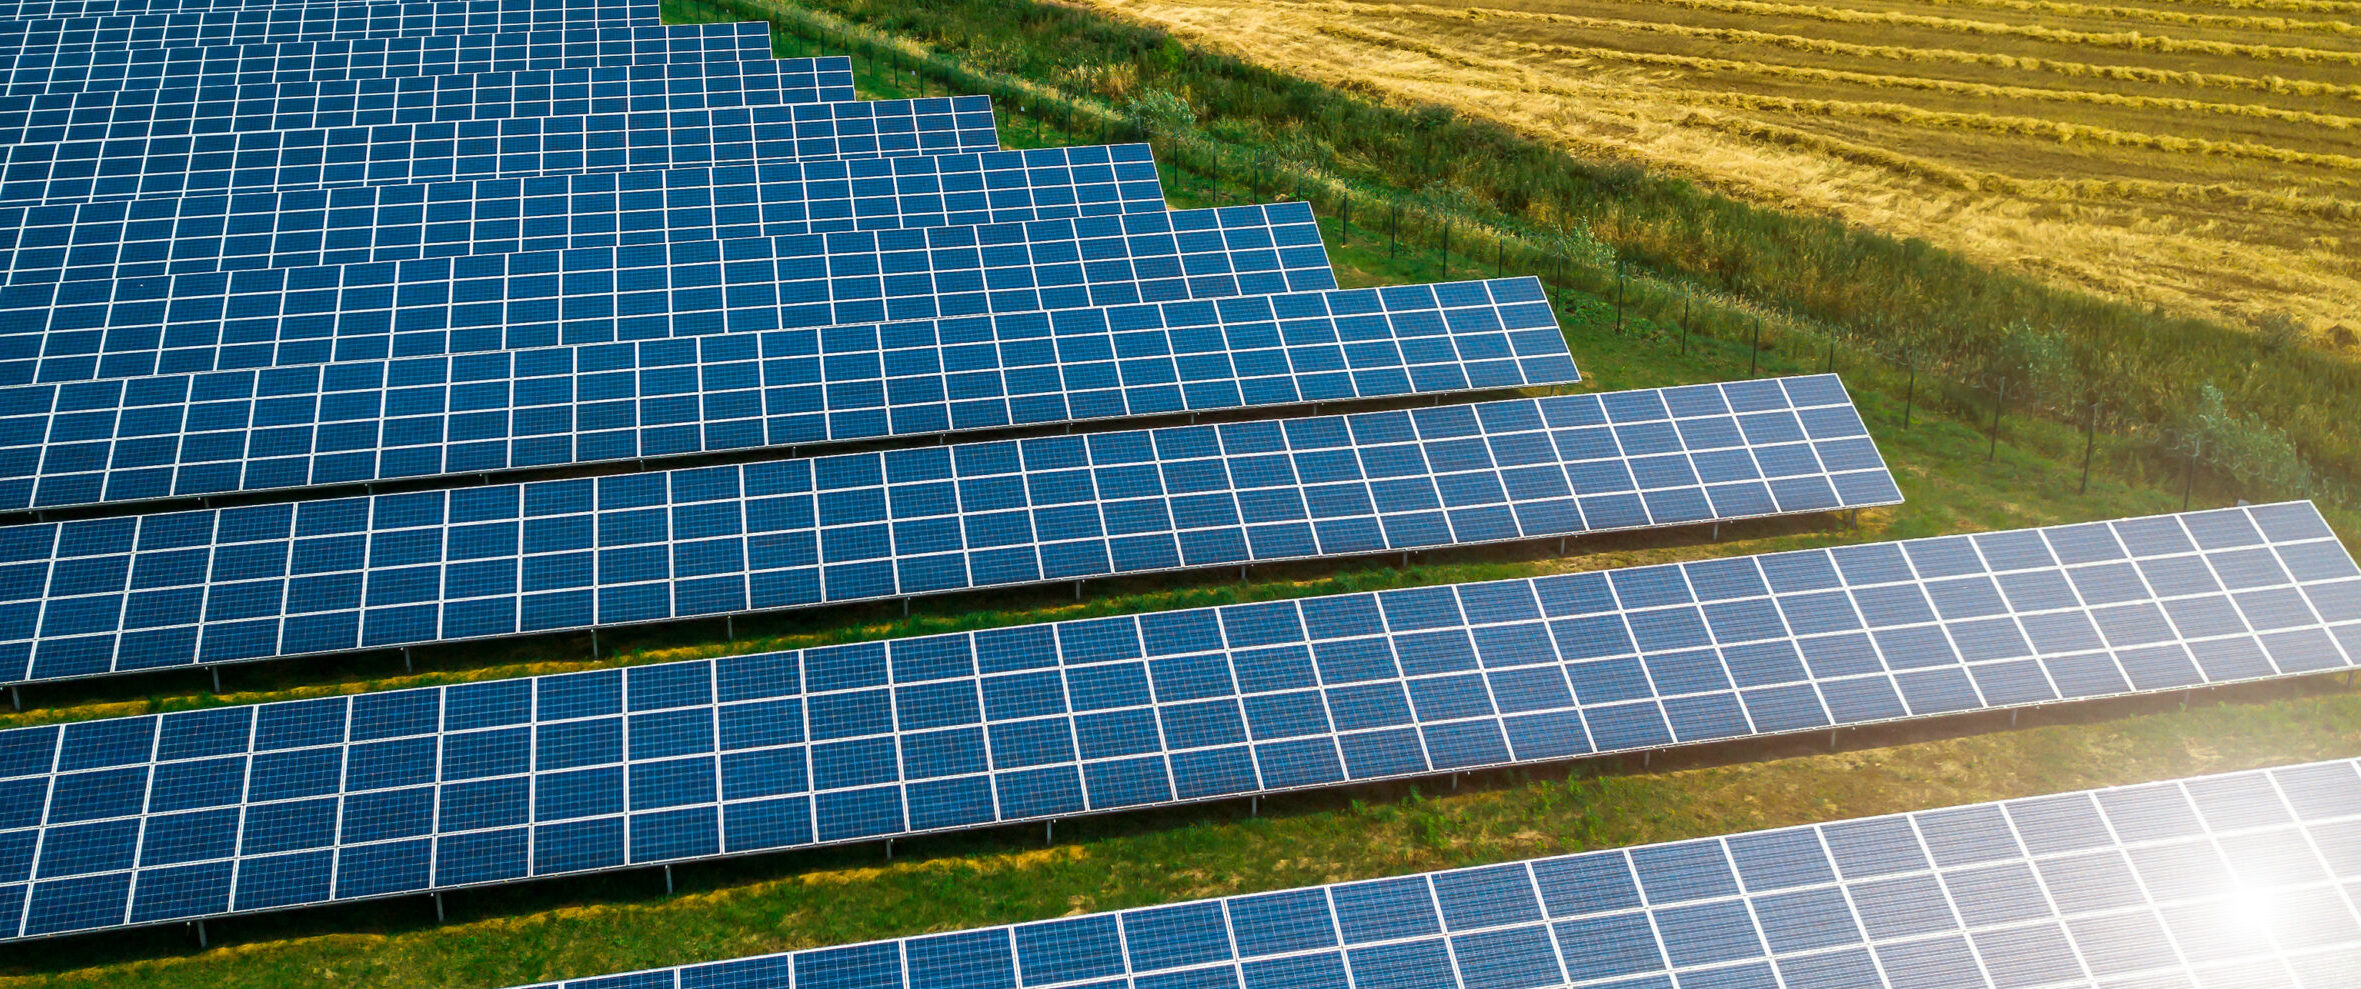 5 Key Considerations for Solar Farm Planning and Development